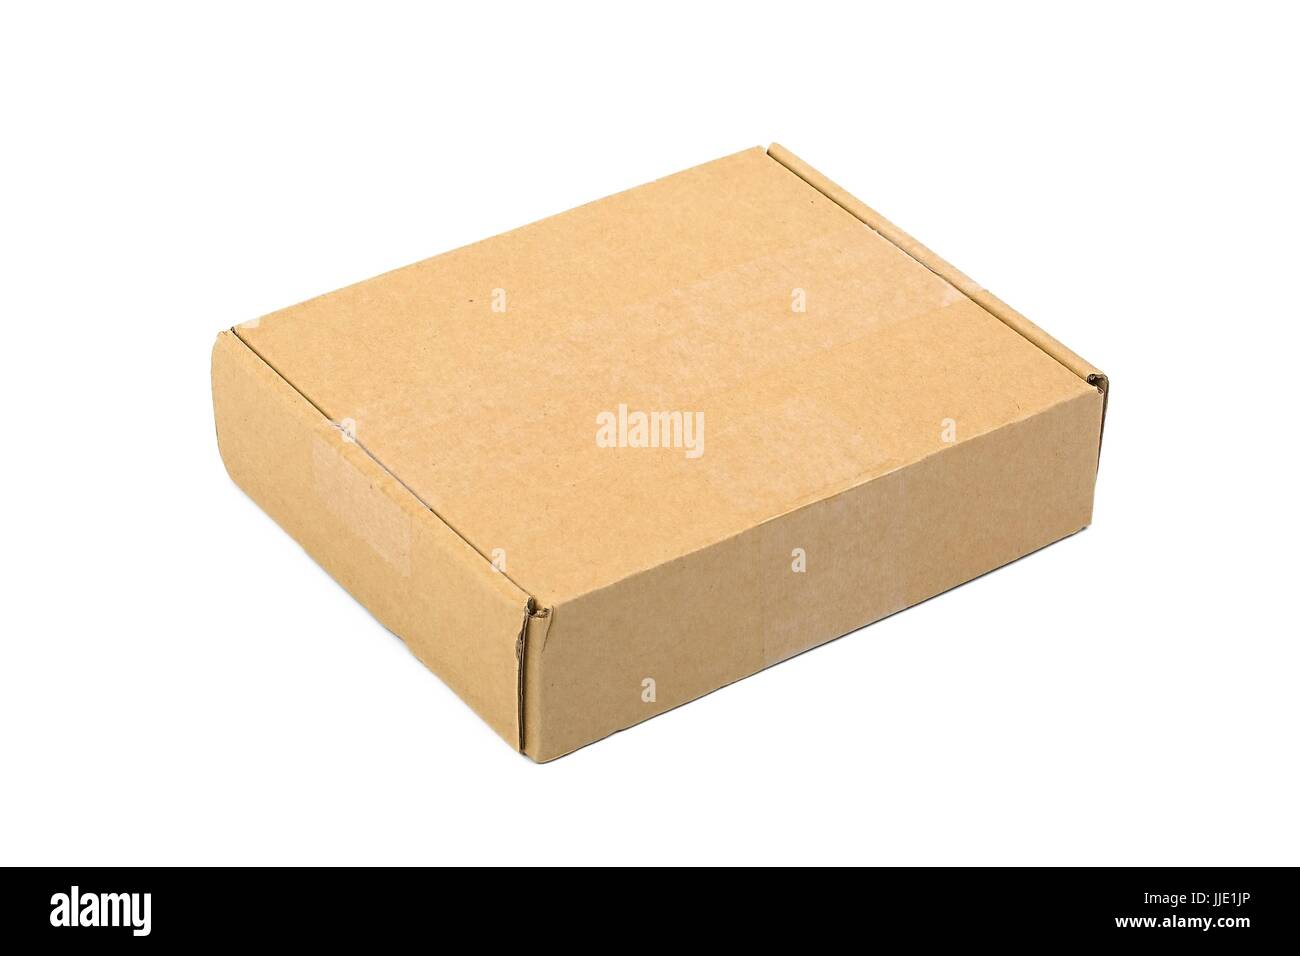 Open cardboard box on white background Stock Photo